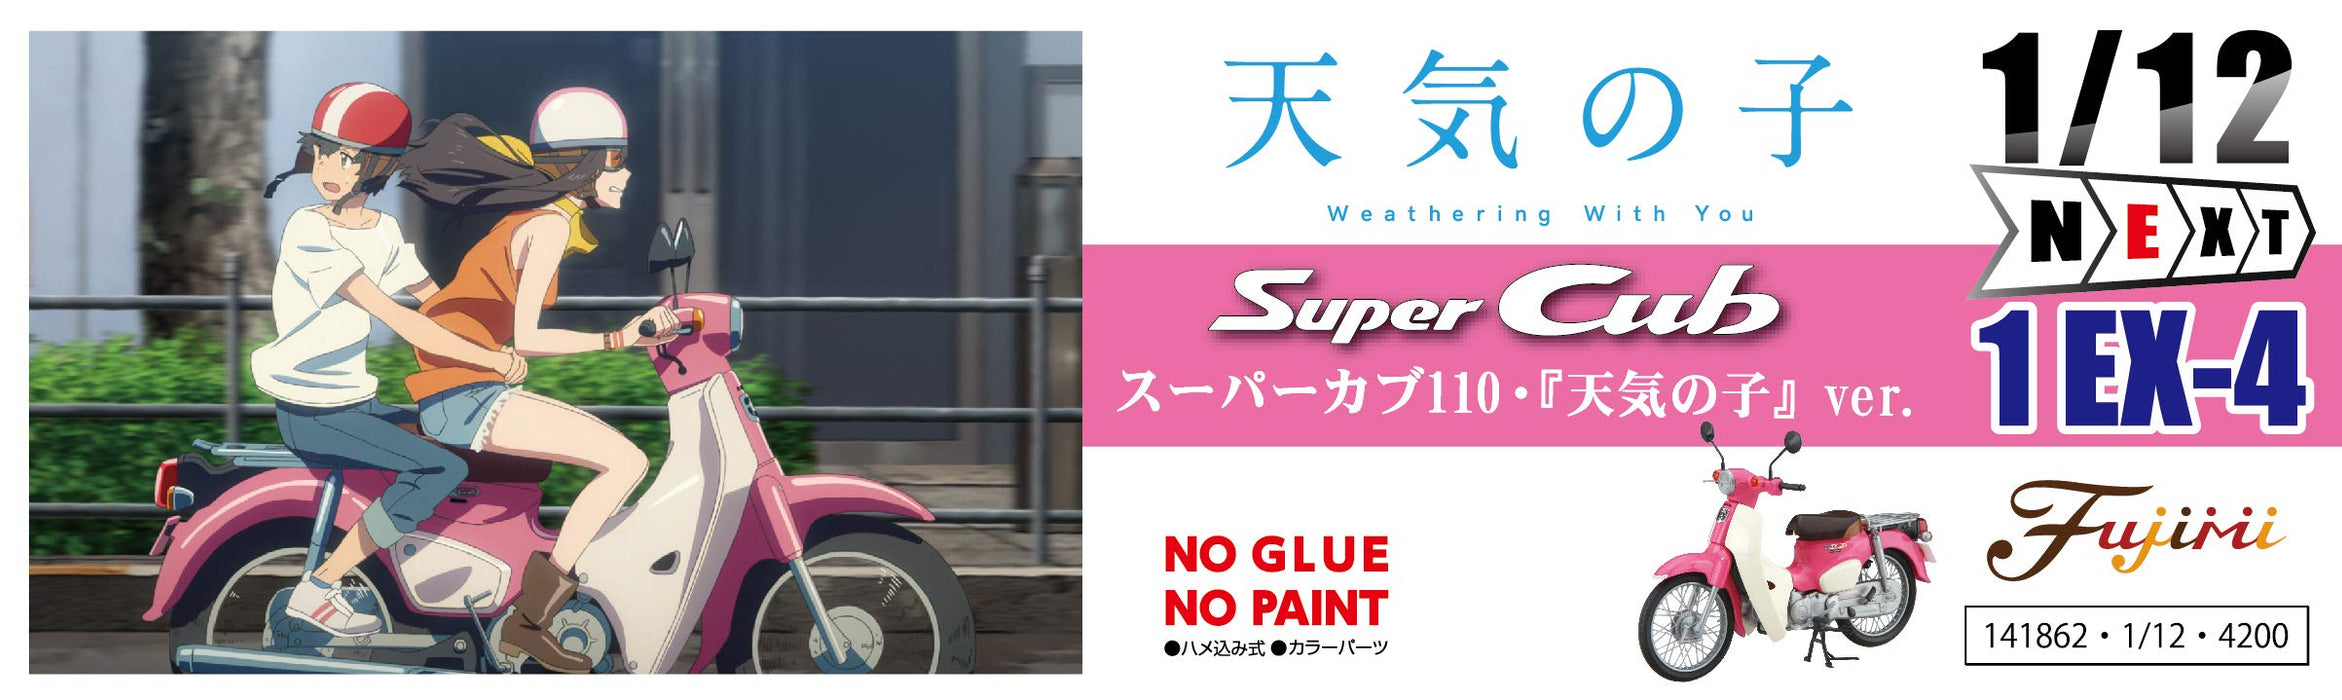 Fujimi Next 1 Ex-4 Honda Super Cub 110 (Weathering With You) 1/12 Japanese Scale Cub Model